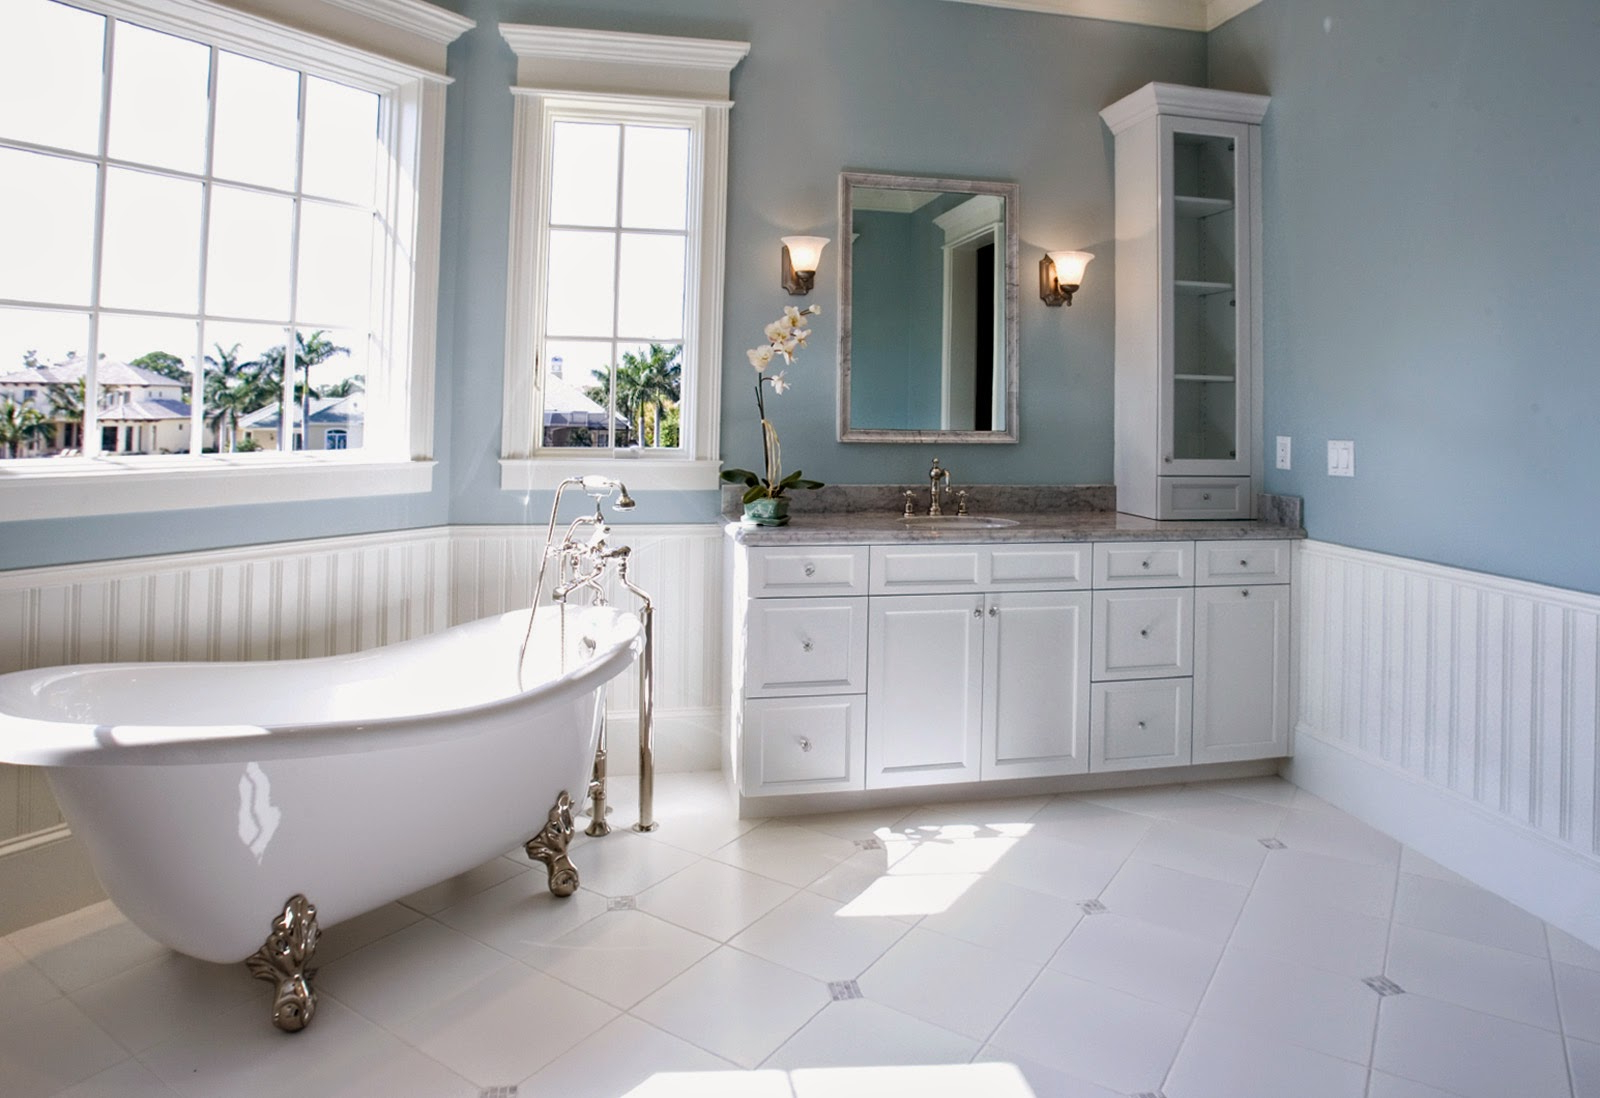 Top 10 Beautiful Bathroom Design 2014 Home Interior Blog